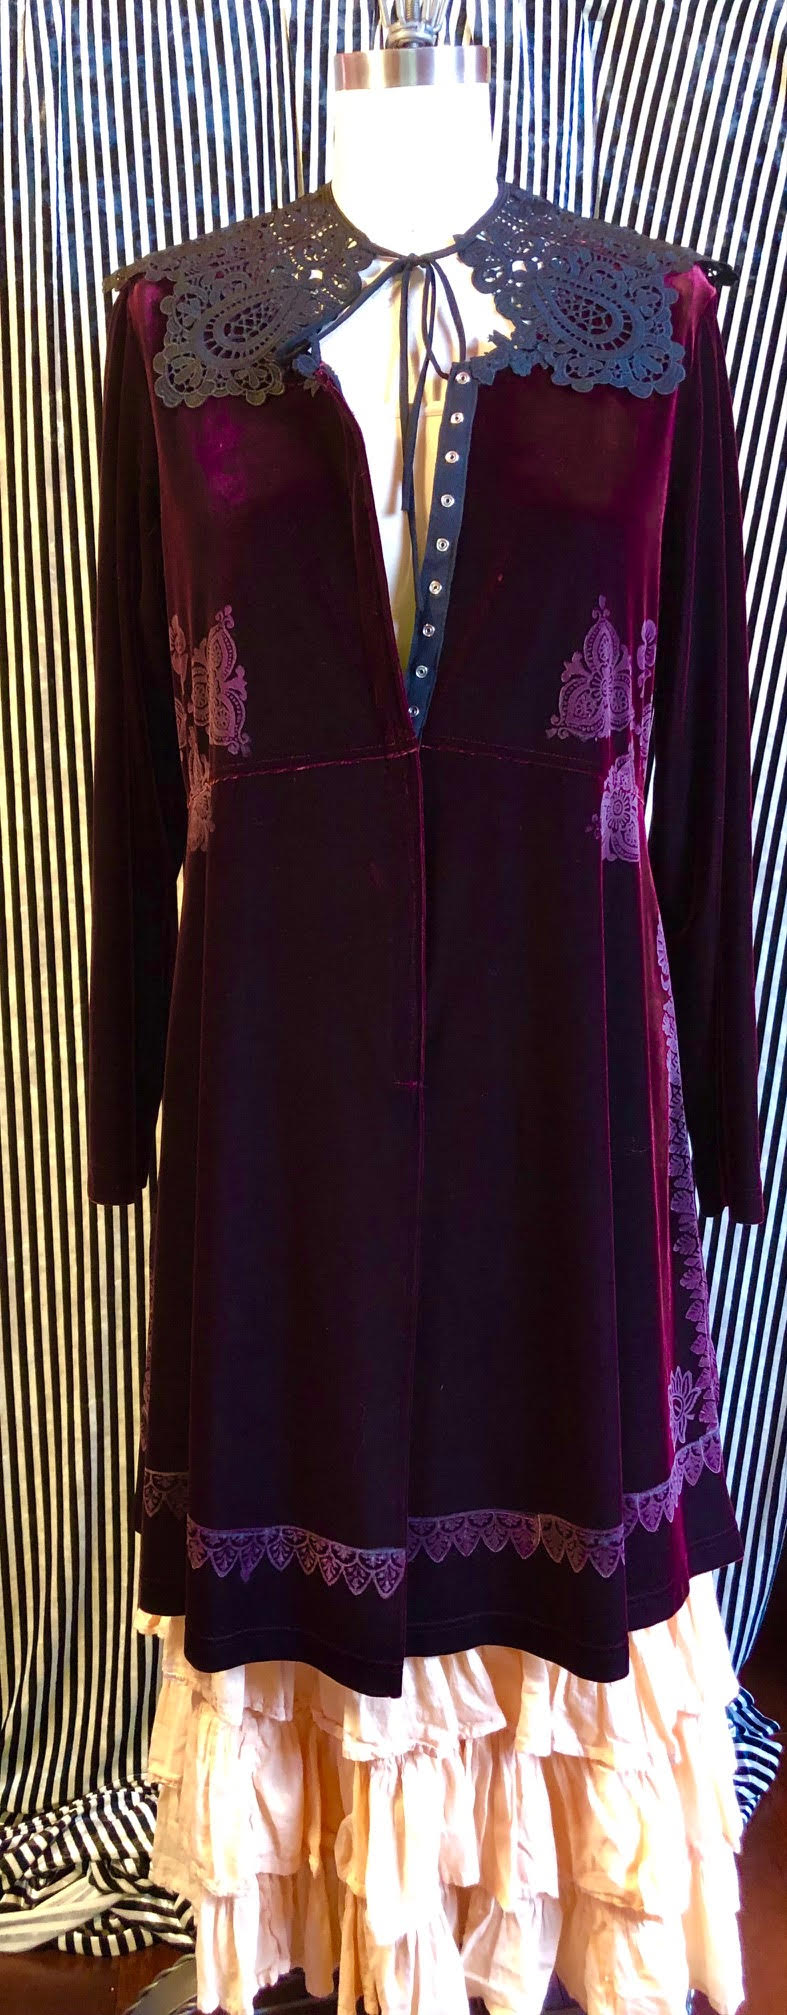 Burgundy jacket/dress